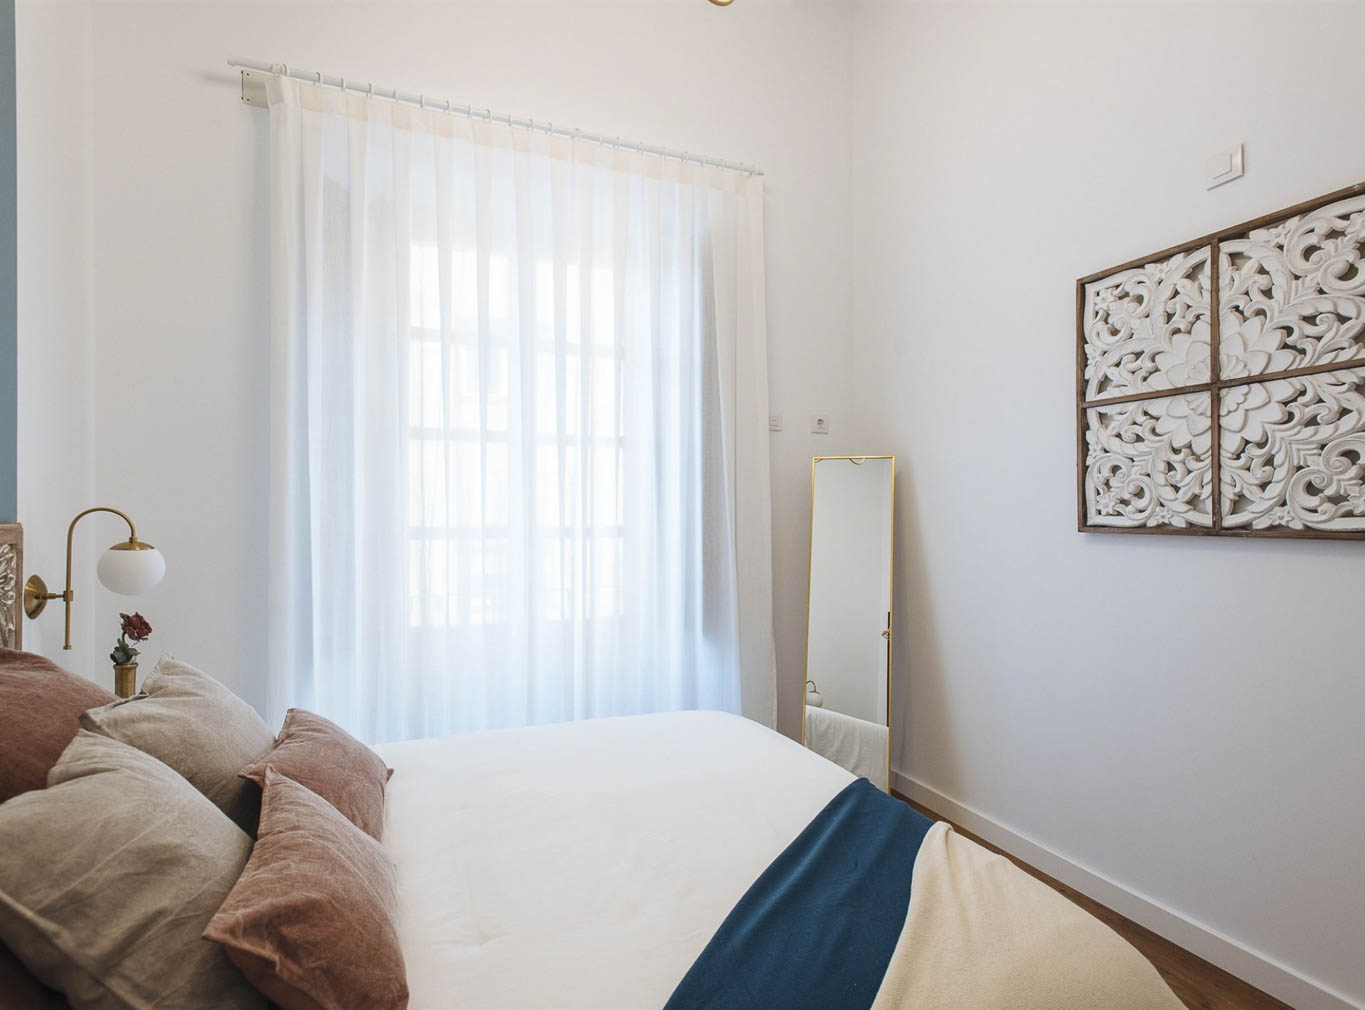 Tourist apartments comfortable bedroom